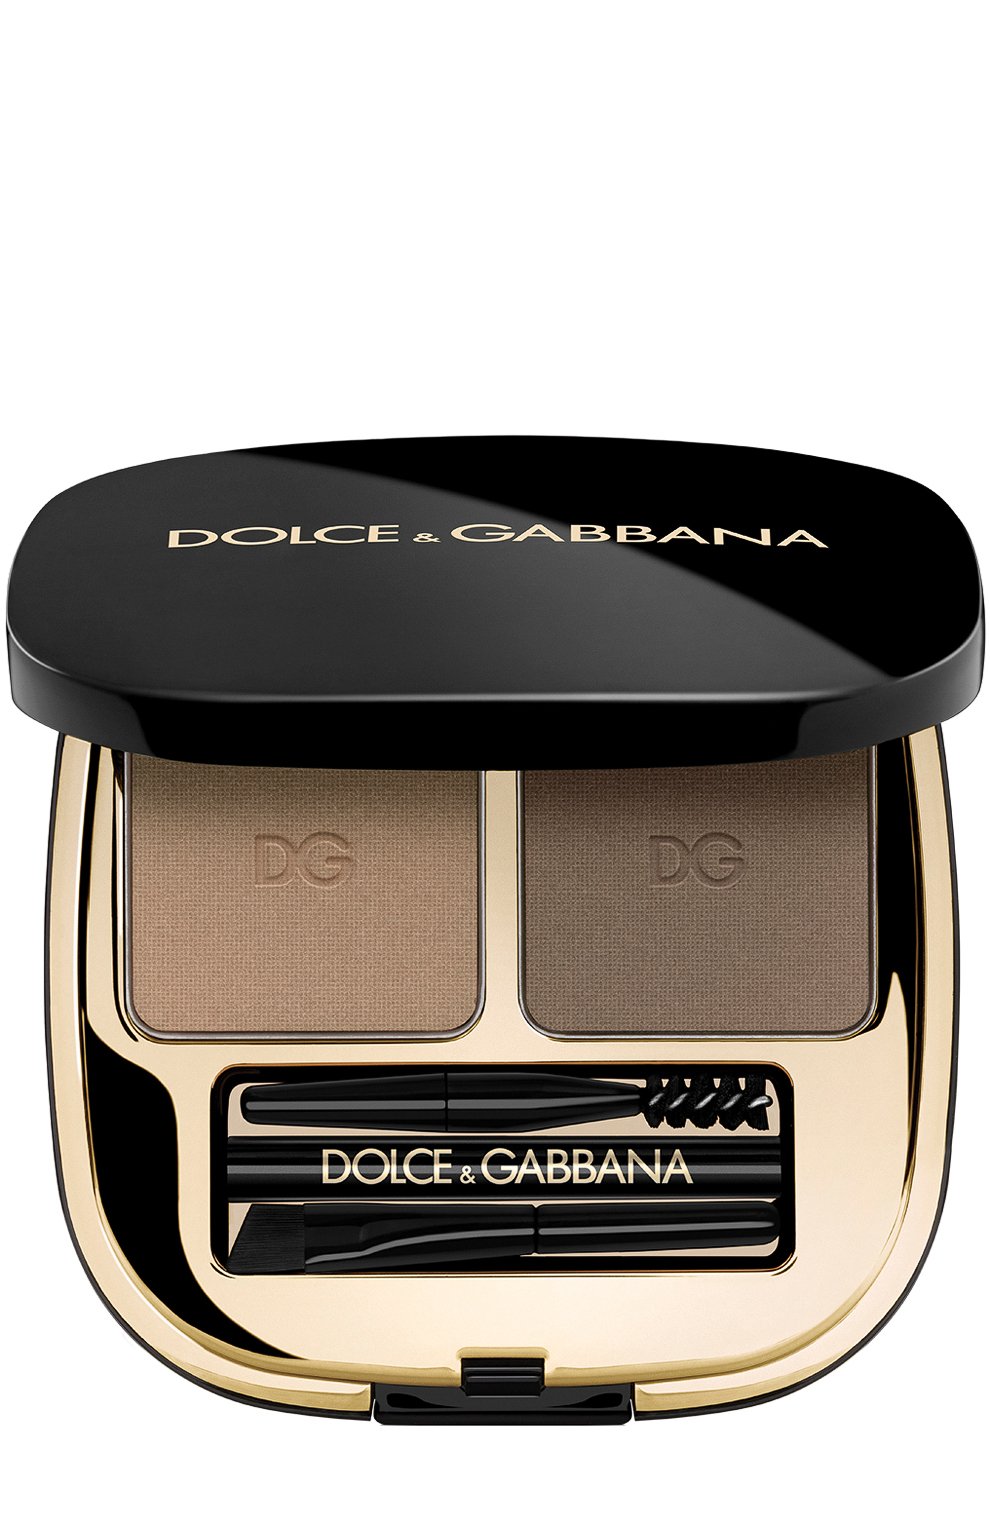 Тени Дольче Габбана 1. Dolce Gabbana тени для бровей. Пудра Дольче Дольче Габбана. Dolce Gabbana Brow Powder Duo natural blond. Тени dolce